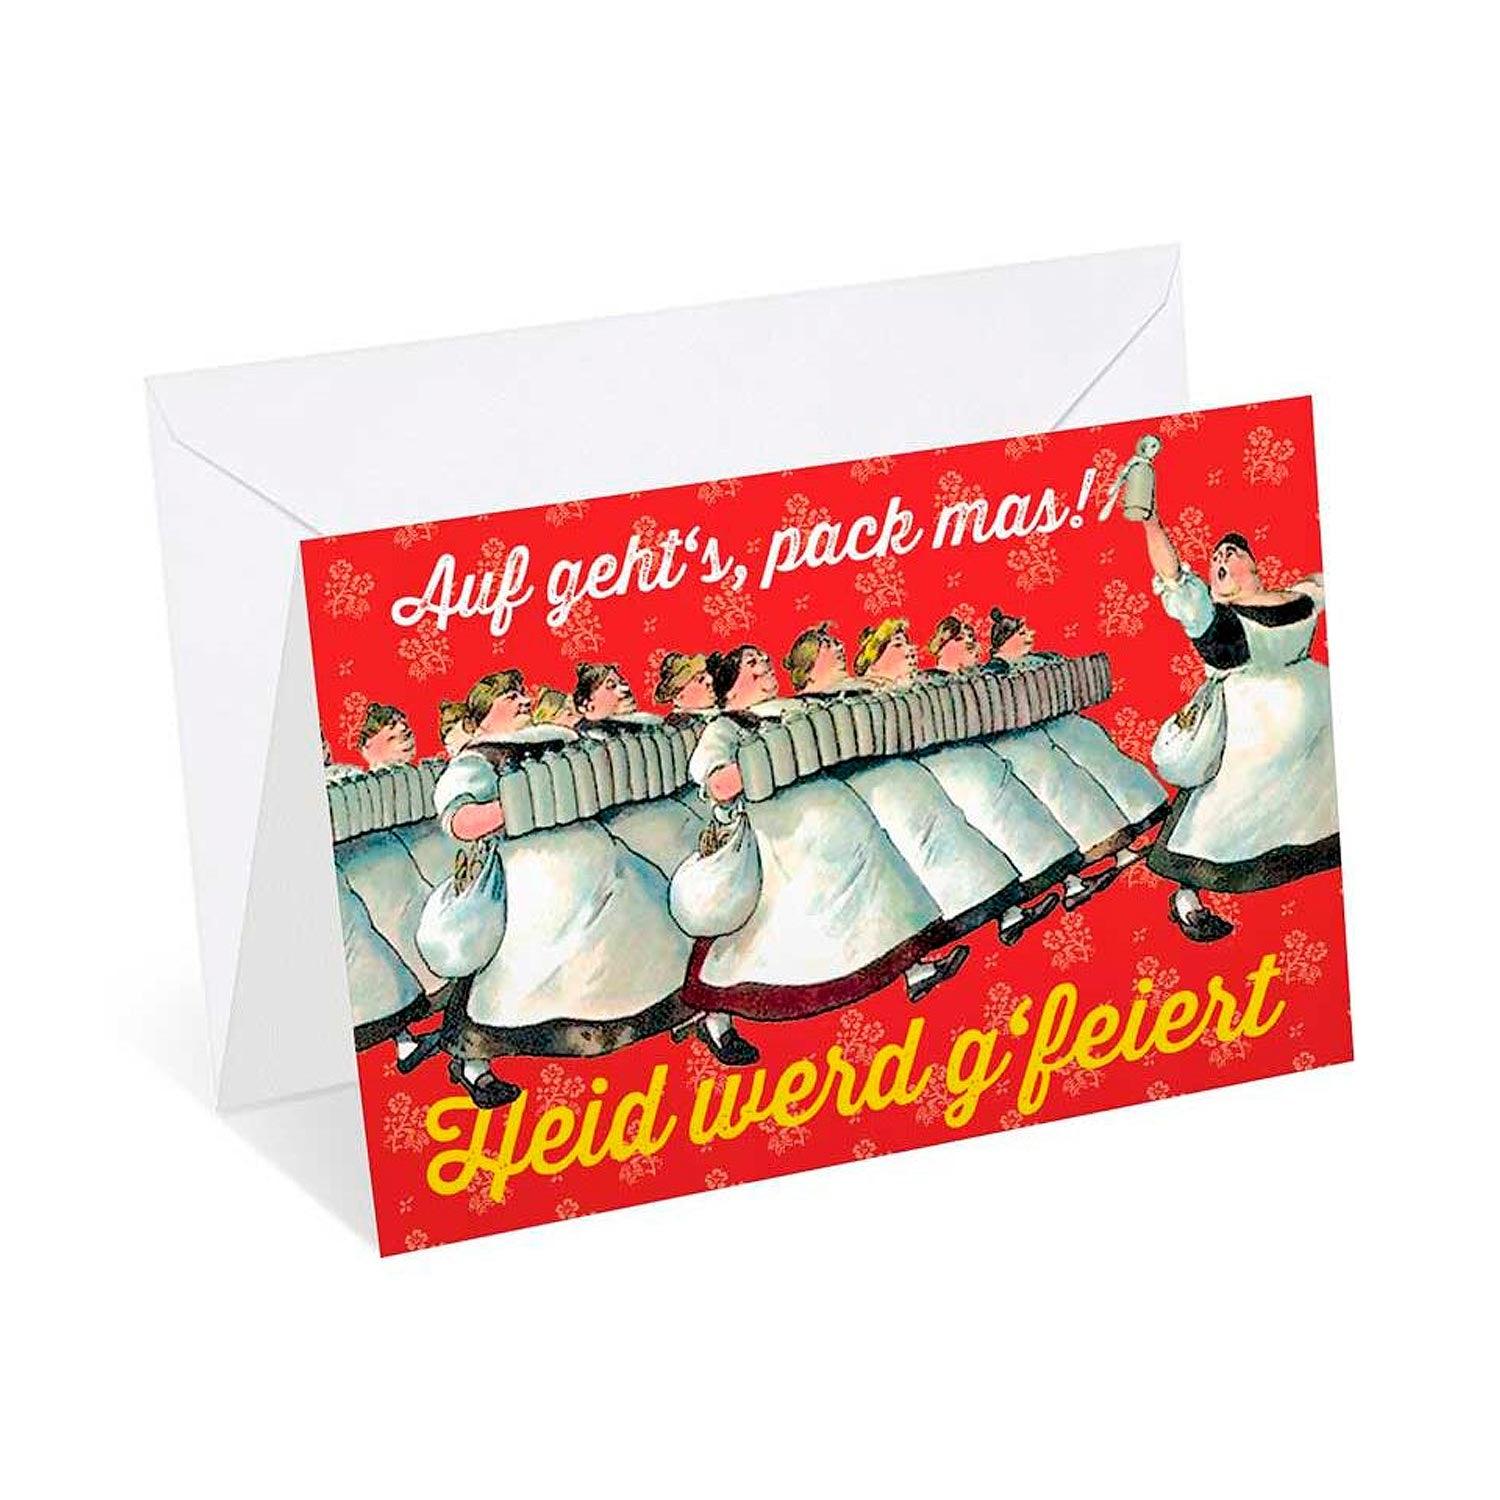 Glückwunschkarte "Heid werd g'feiert" - bavariashop - mei LebensGfui